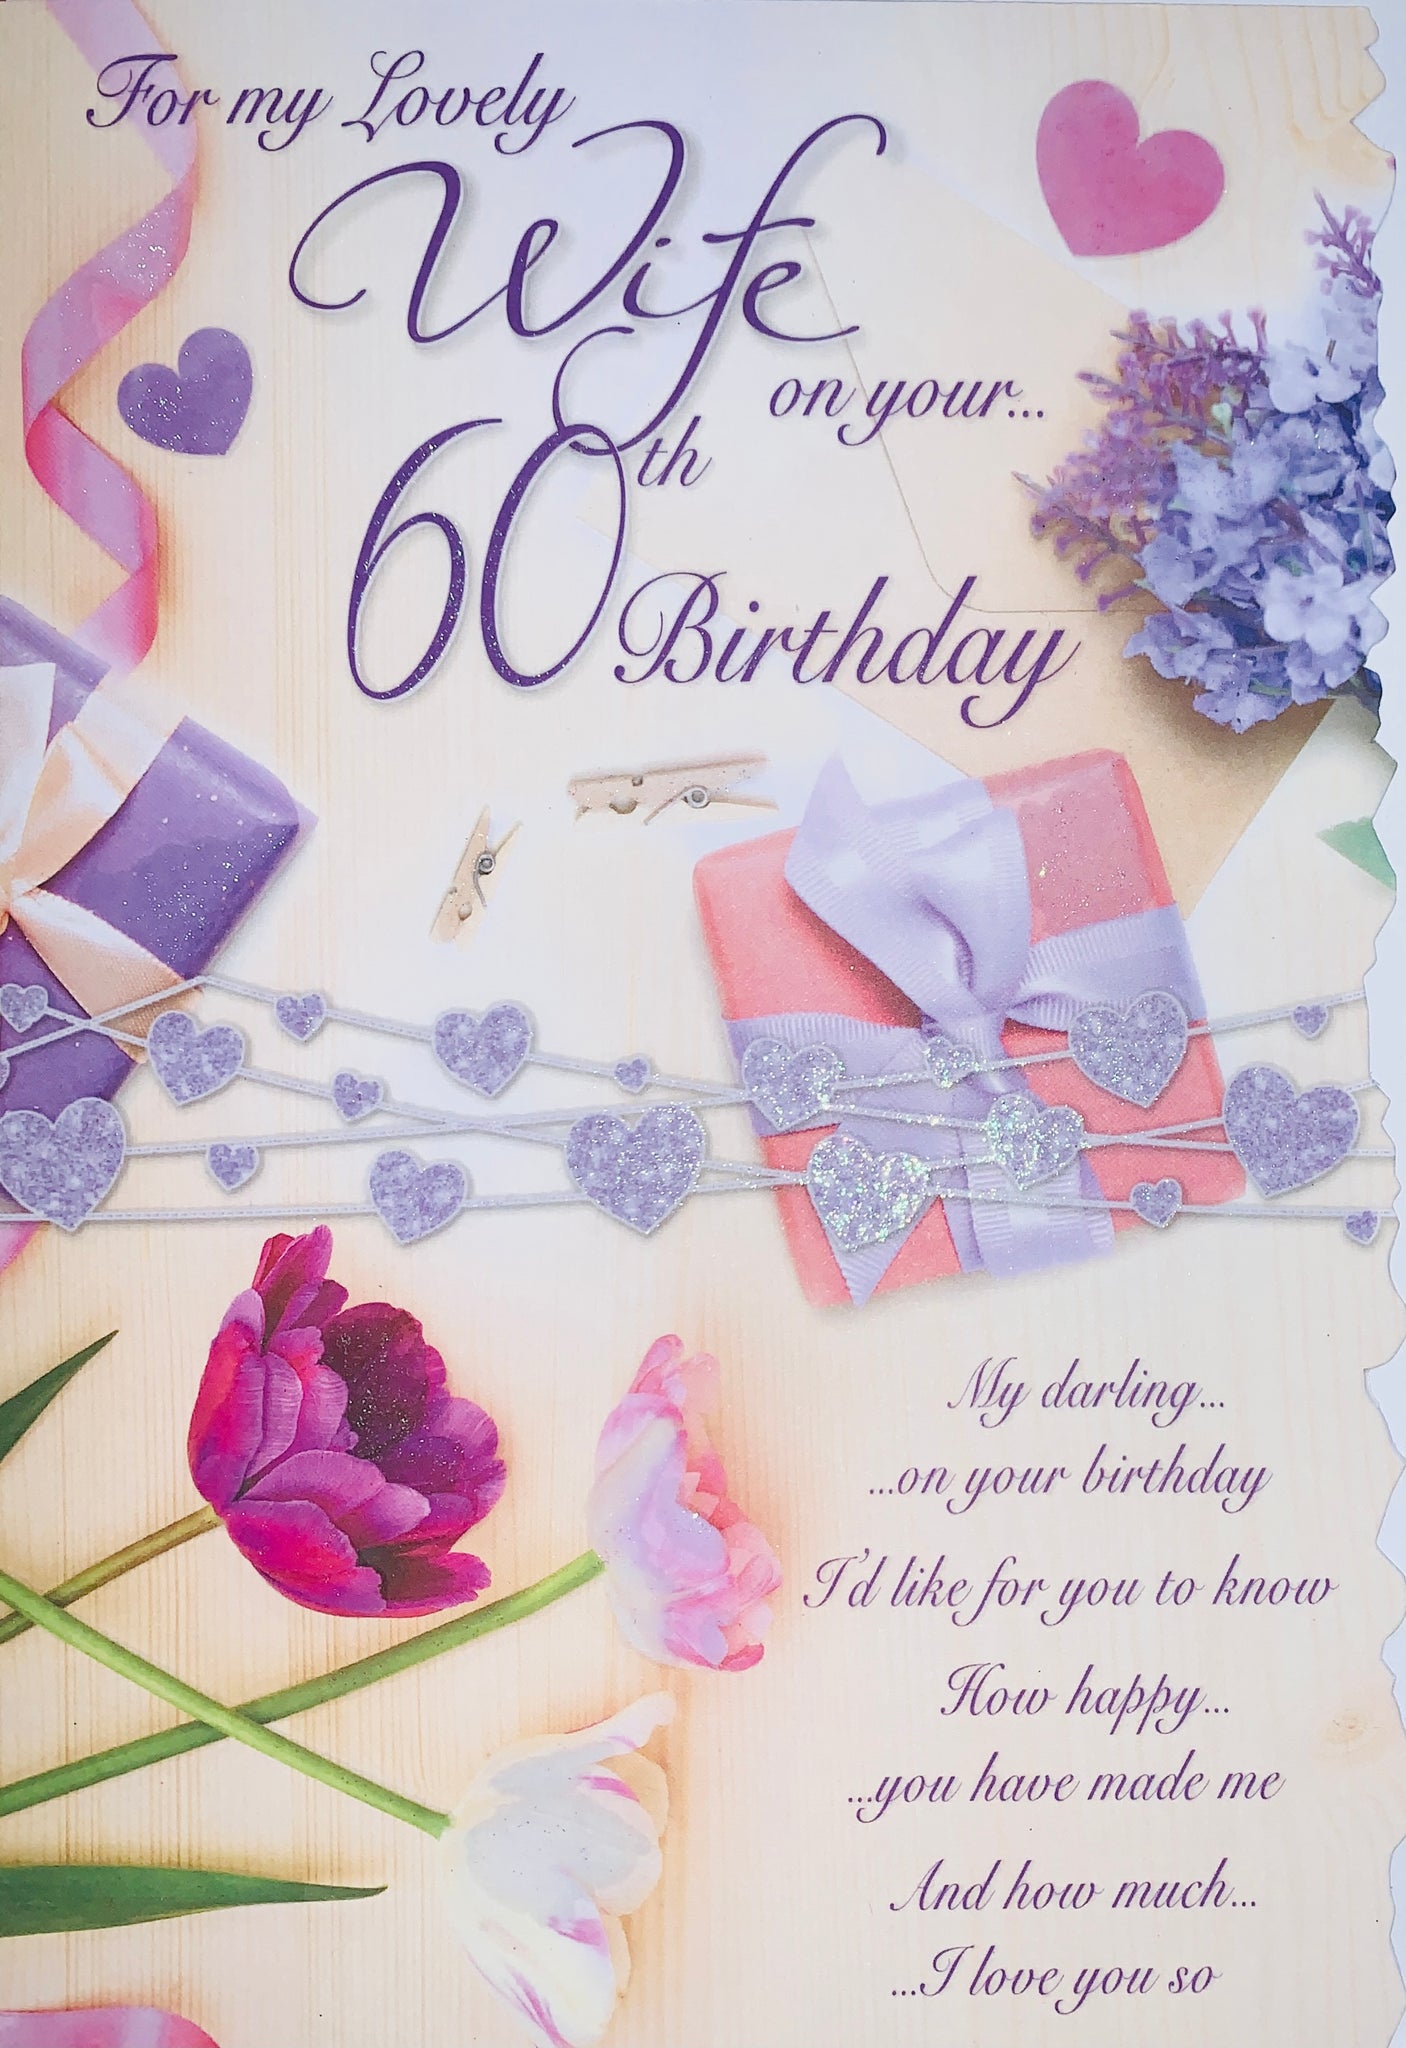 Wife 60th birthday card- beautiful words